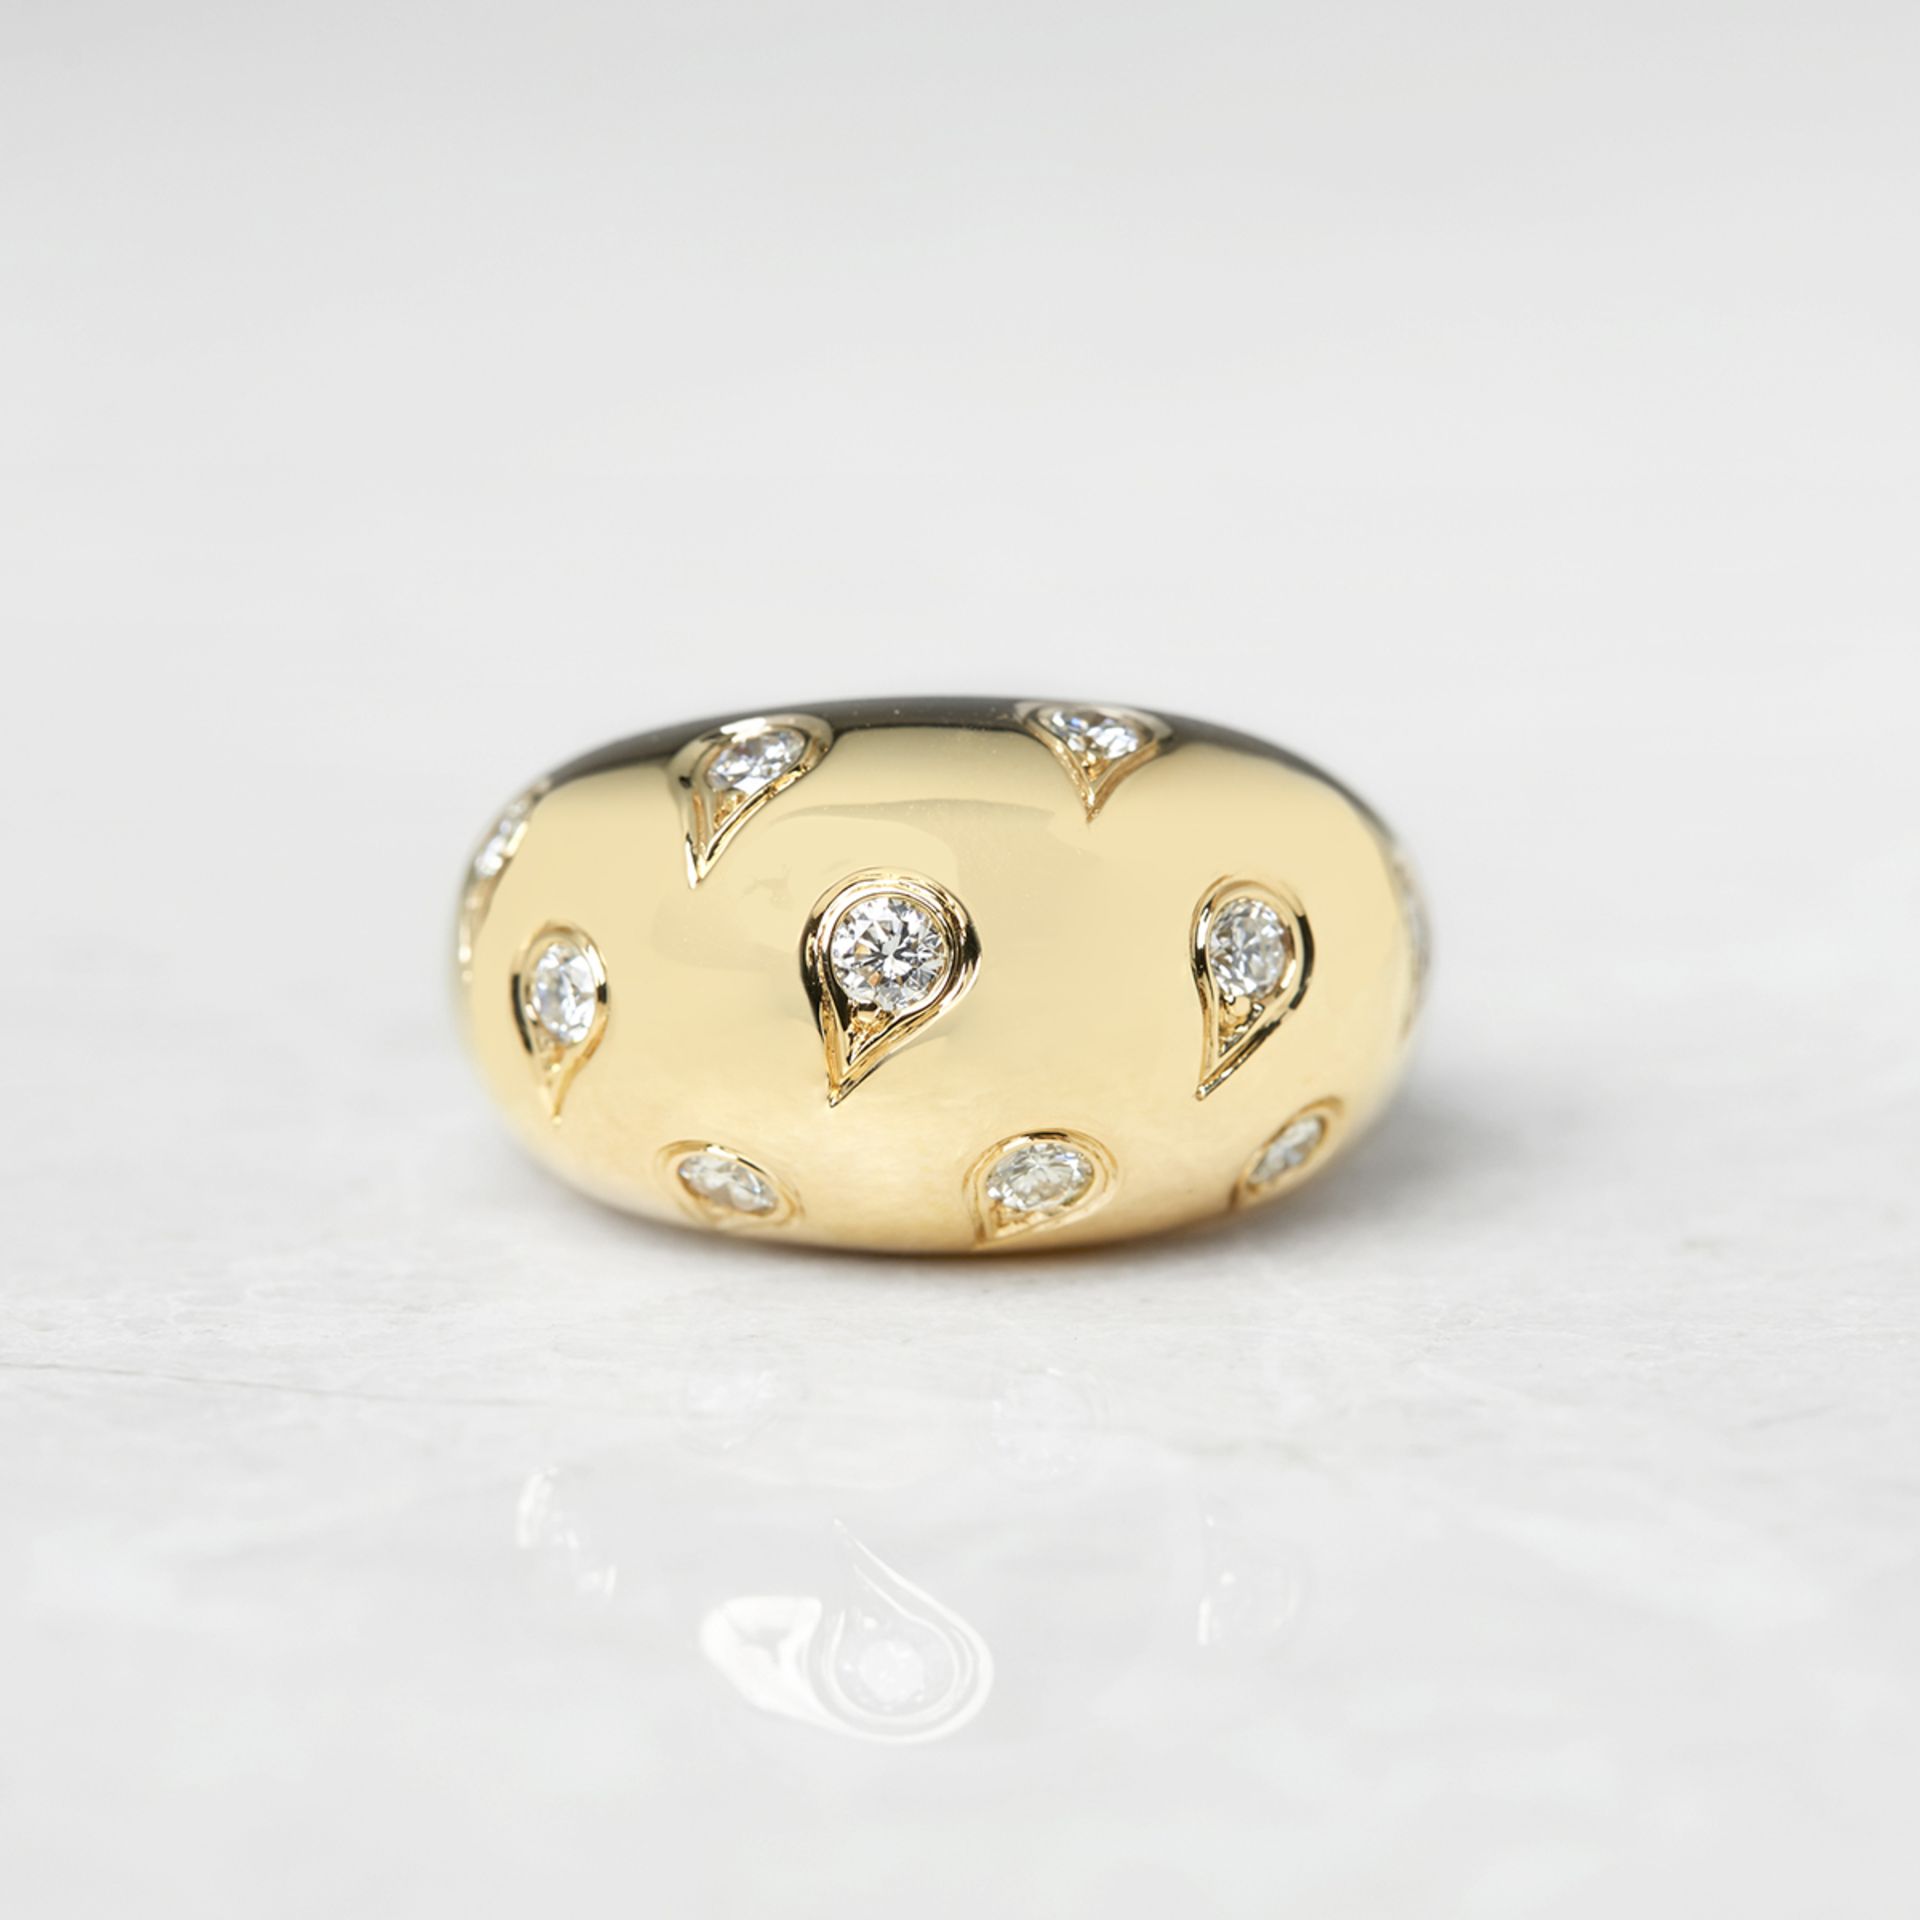 Cartier 18k Yellow Gold 1.00ct Diamond Bombe Ring - Image 2 of 8